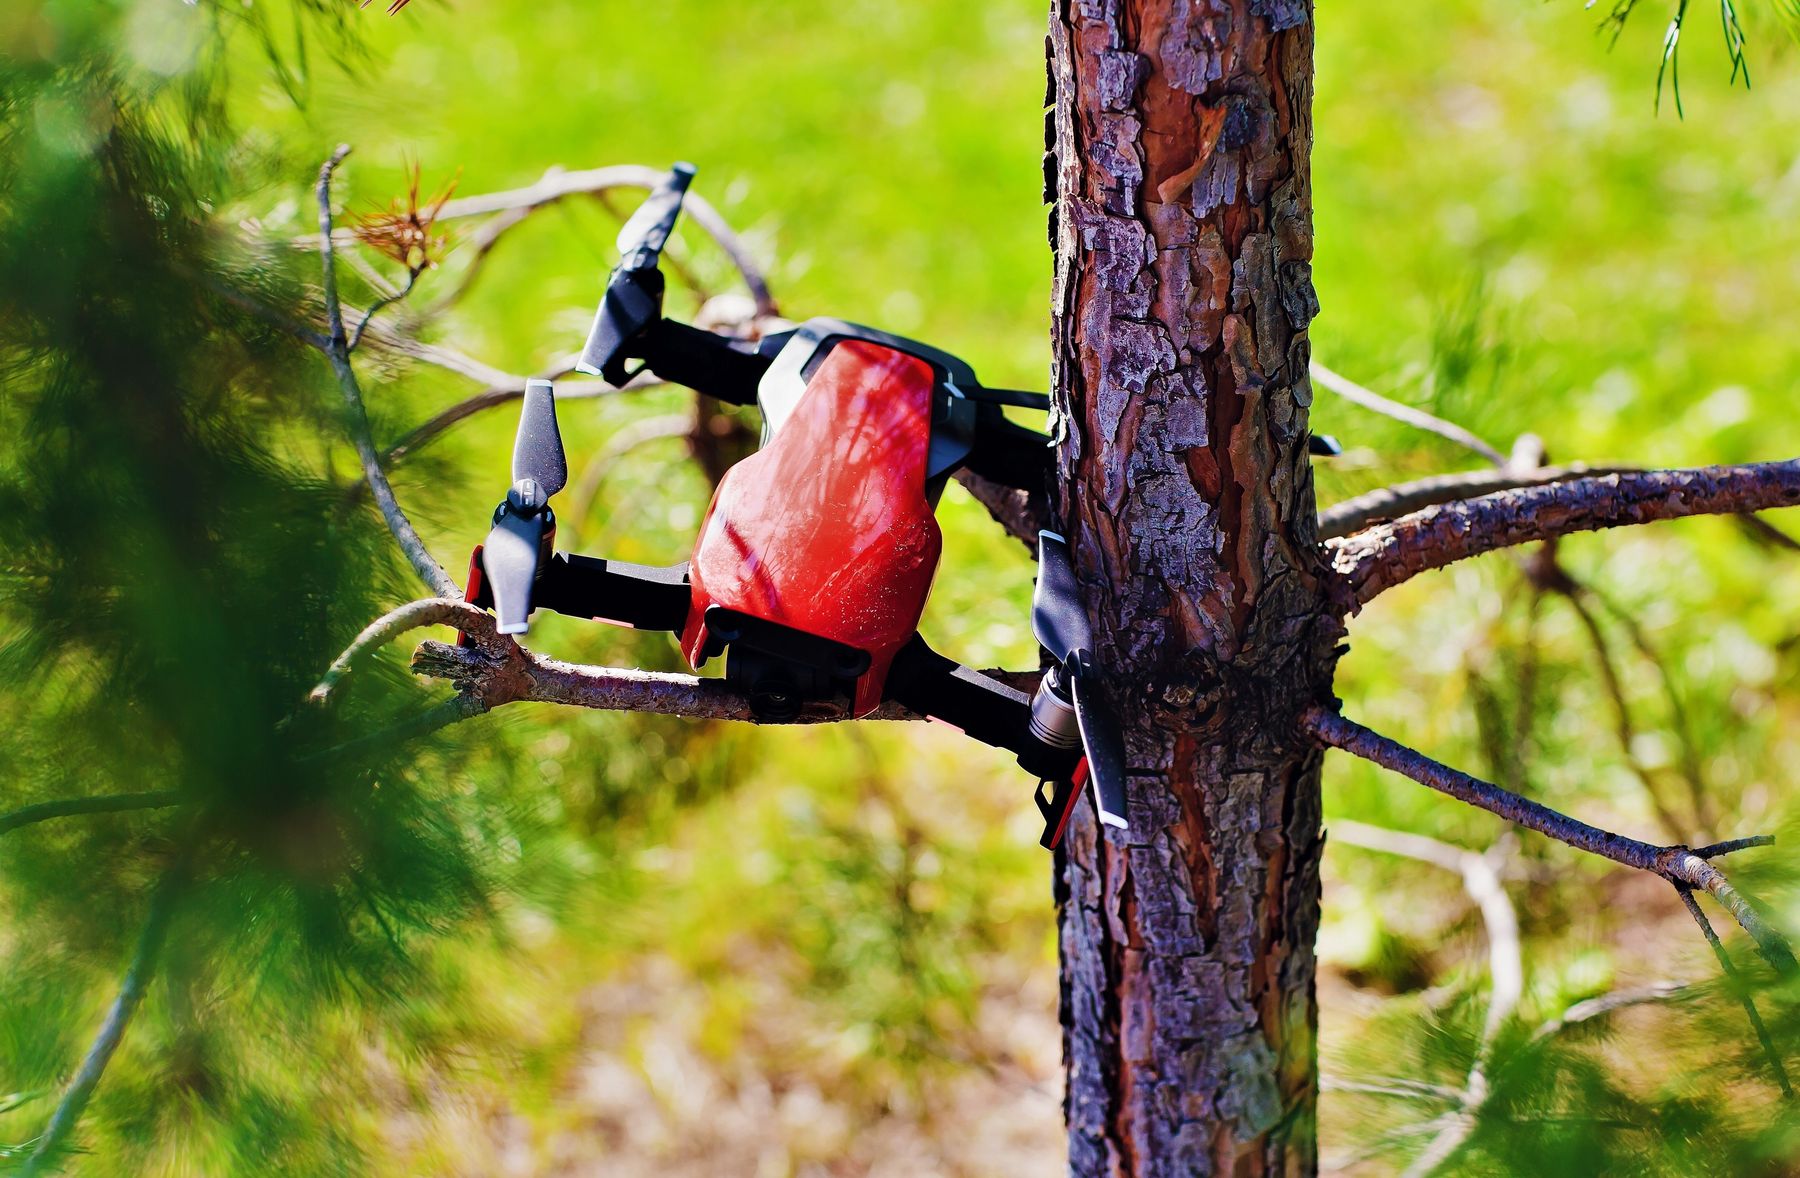 Drone Stuck in Tree